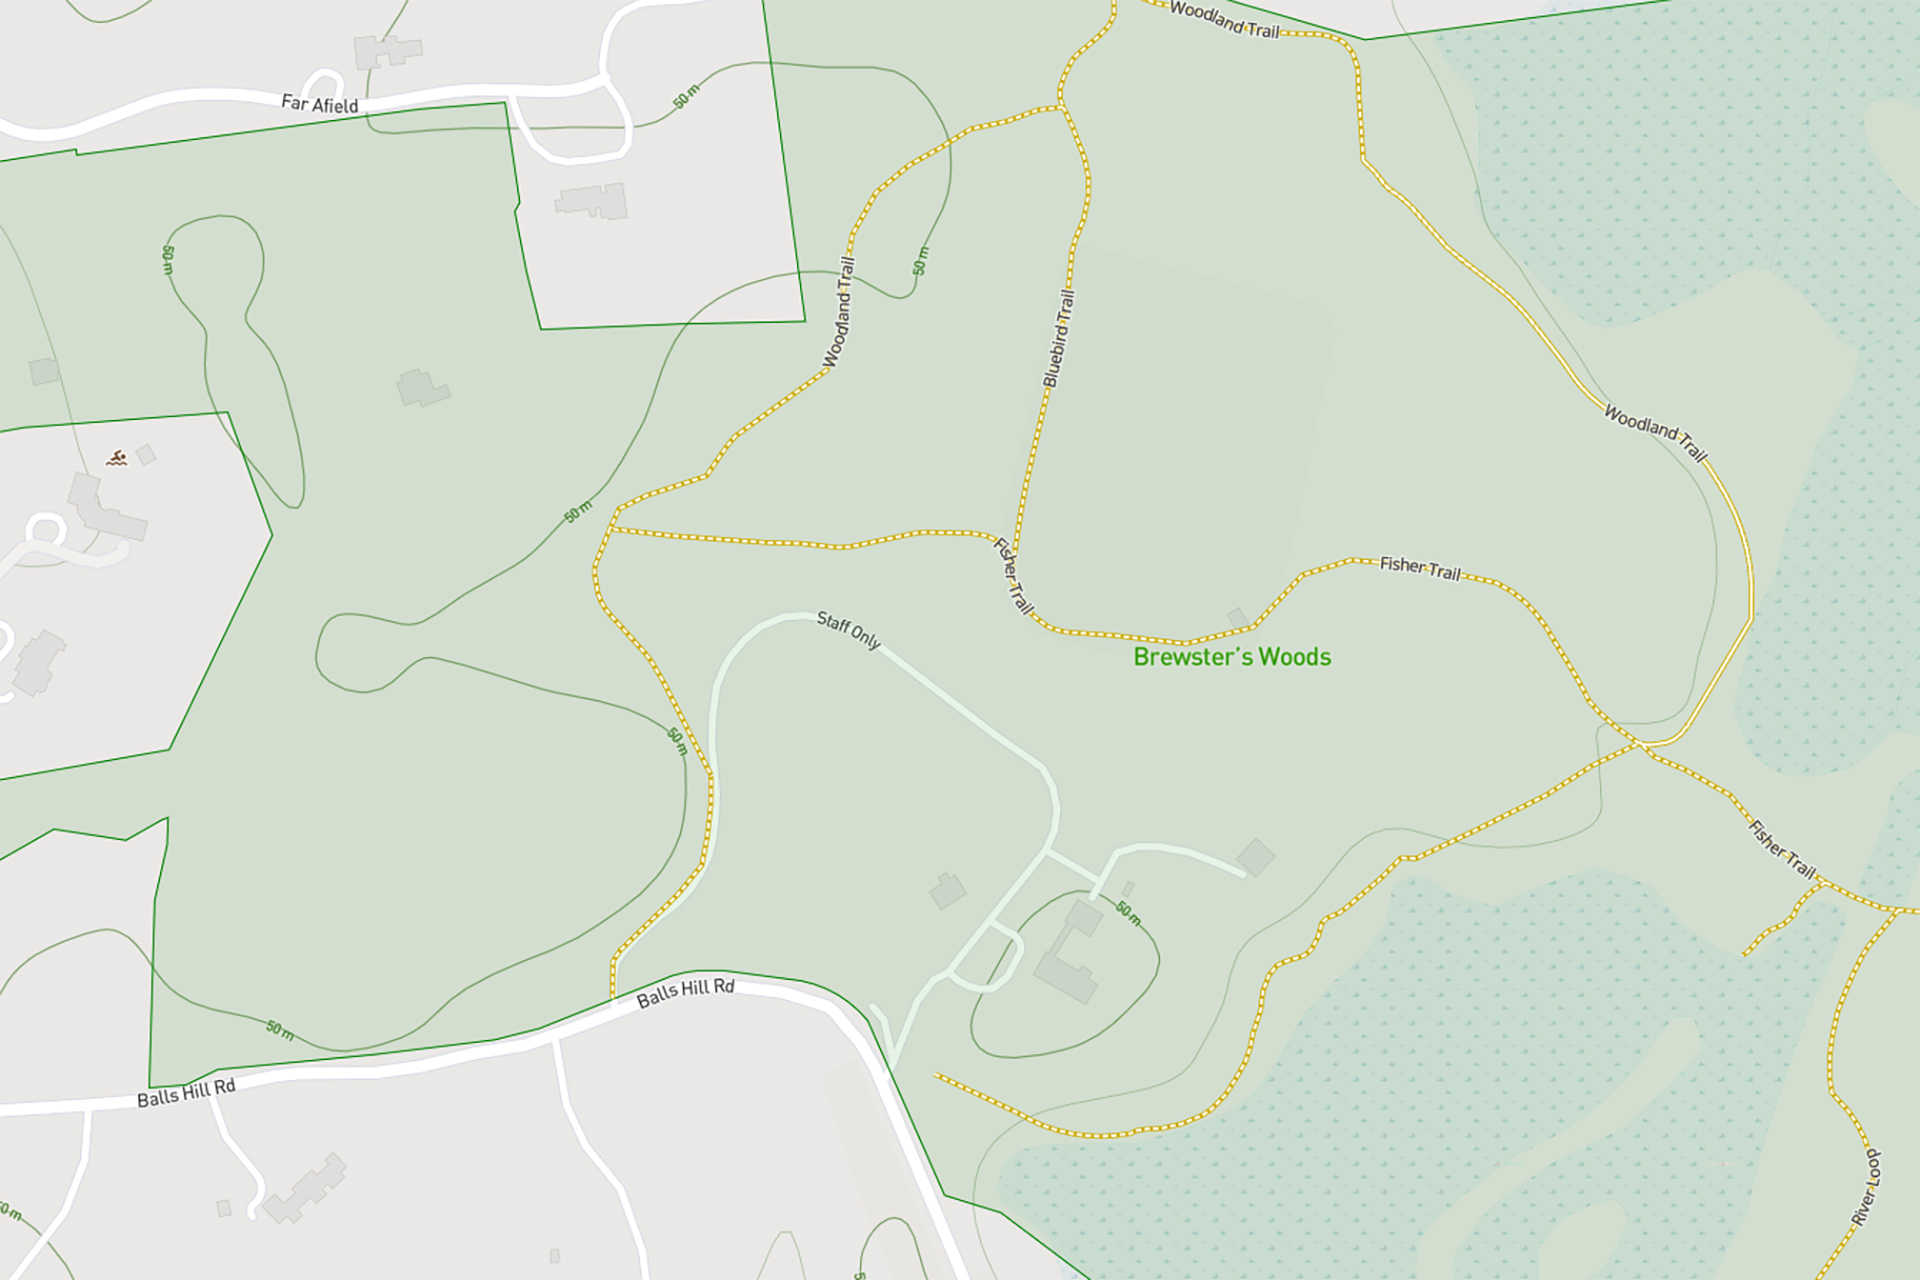 A screenshot of Brewster's Woods' digital trail map